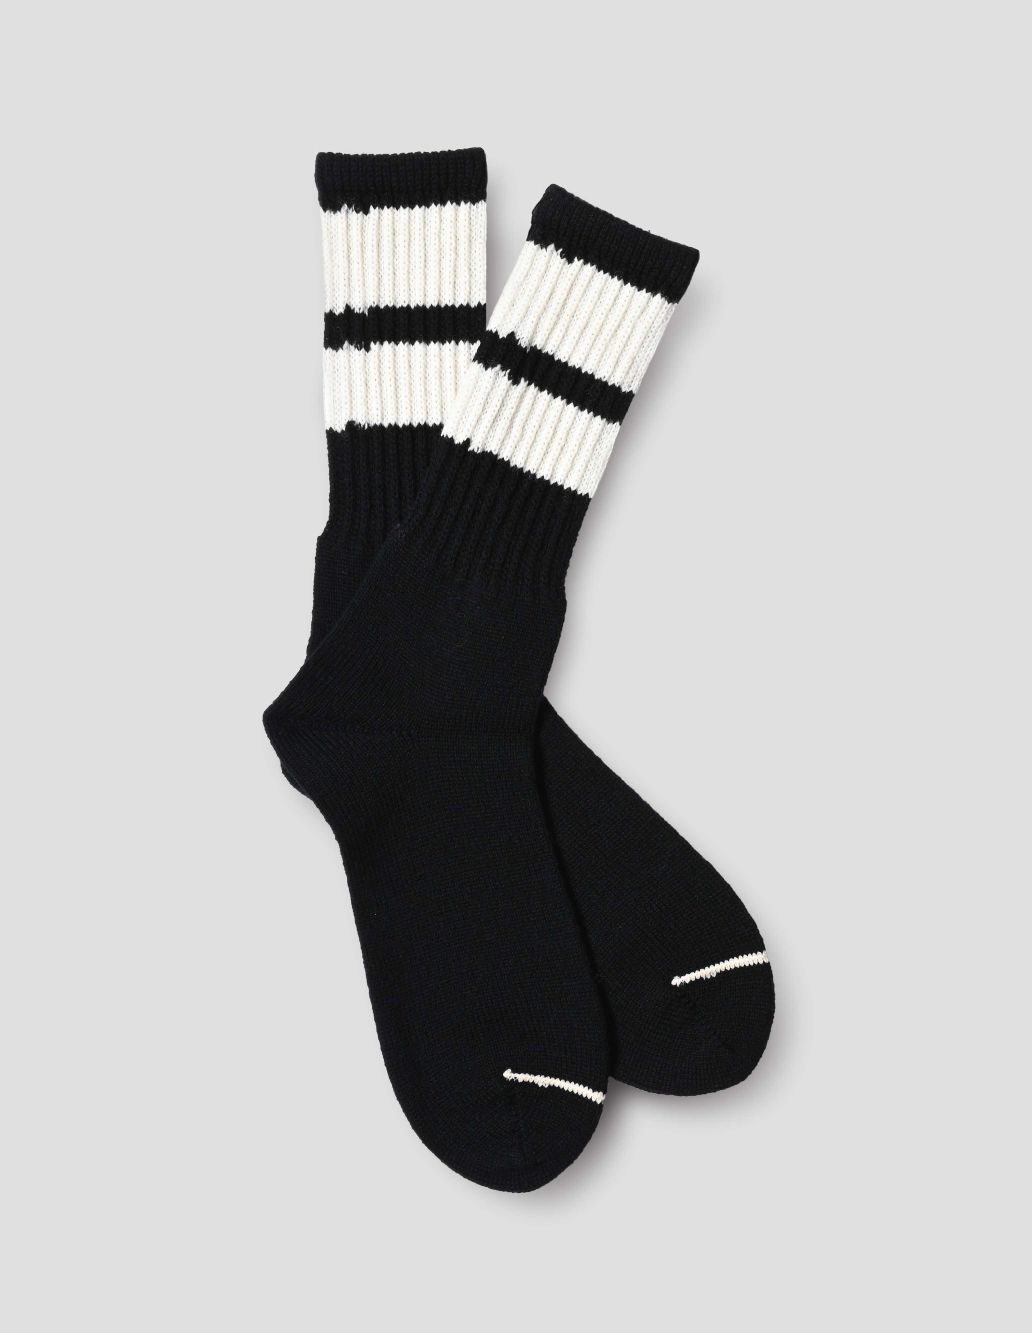 MARGARET HOWELL - Black and off white wool sock | MHL. by Margaret Howell